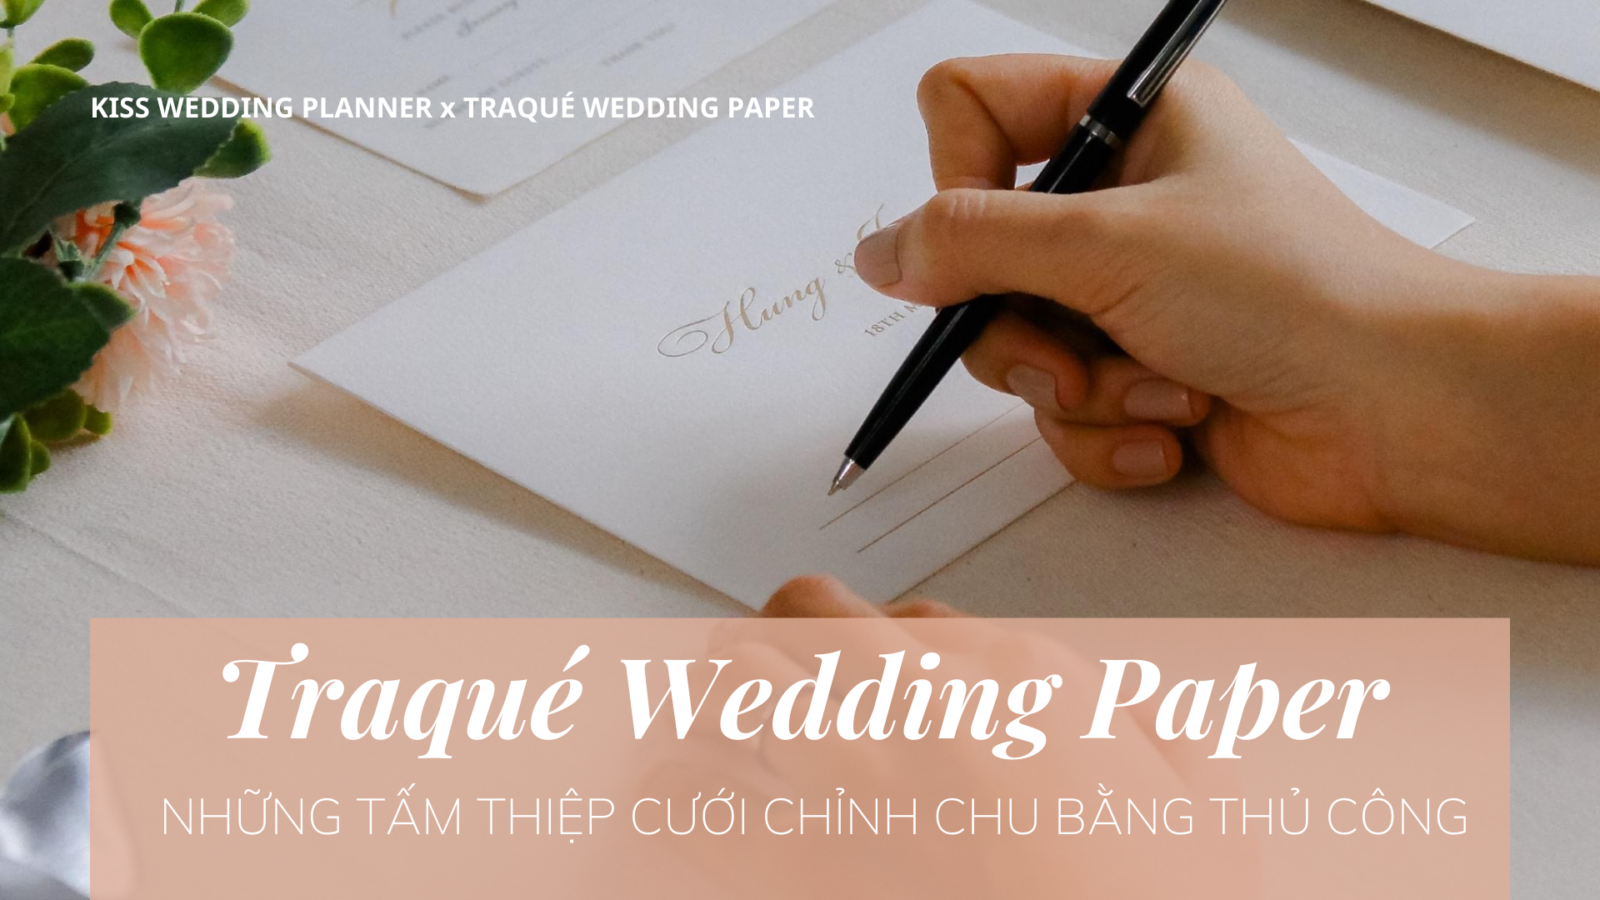 traque wedding paper